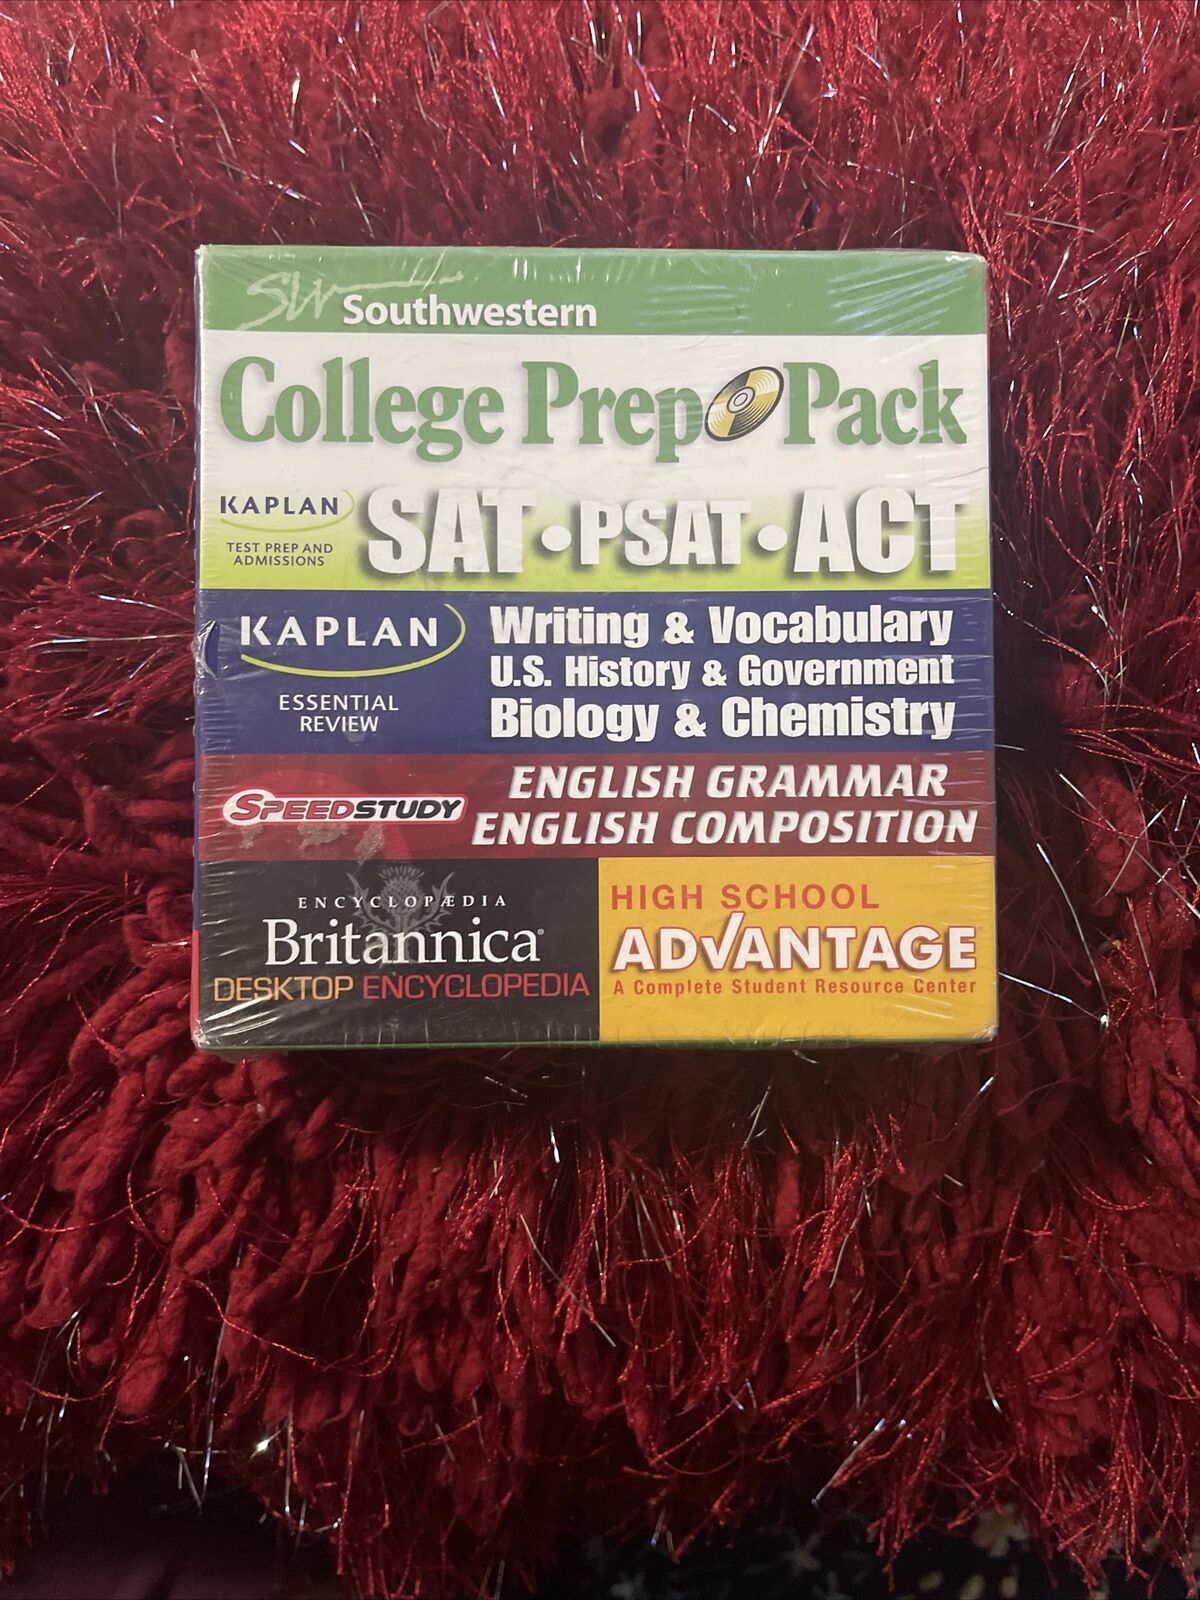 College Prep Pack CD; Kaplan SAT, PSAT, ACT, Encycopedia Windows and Mac Sealed